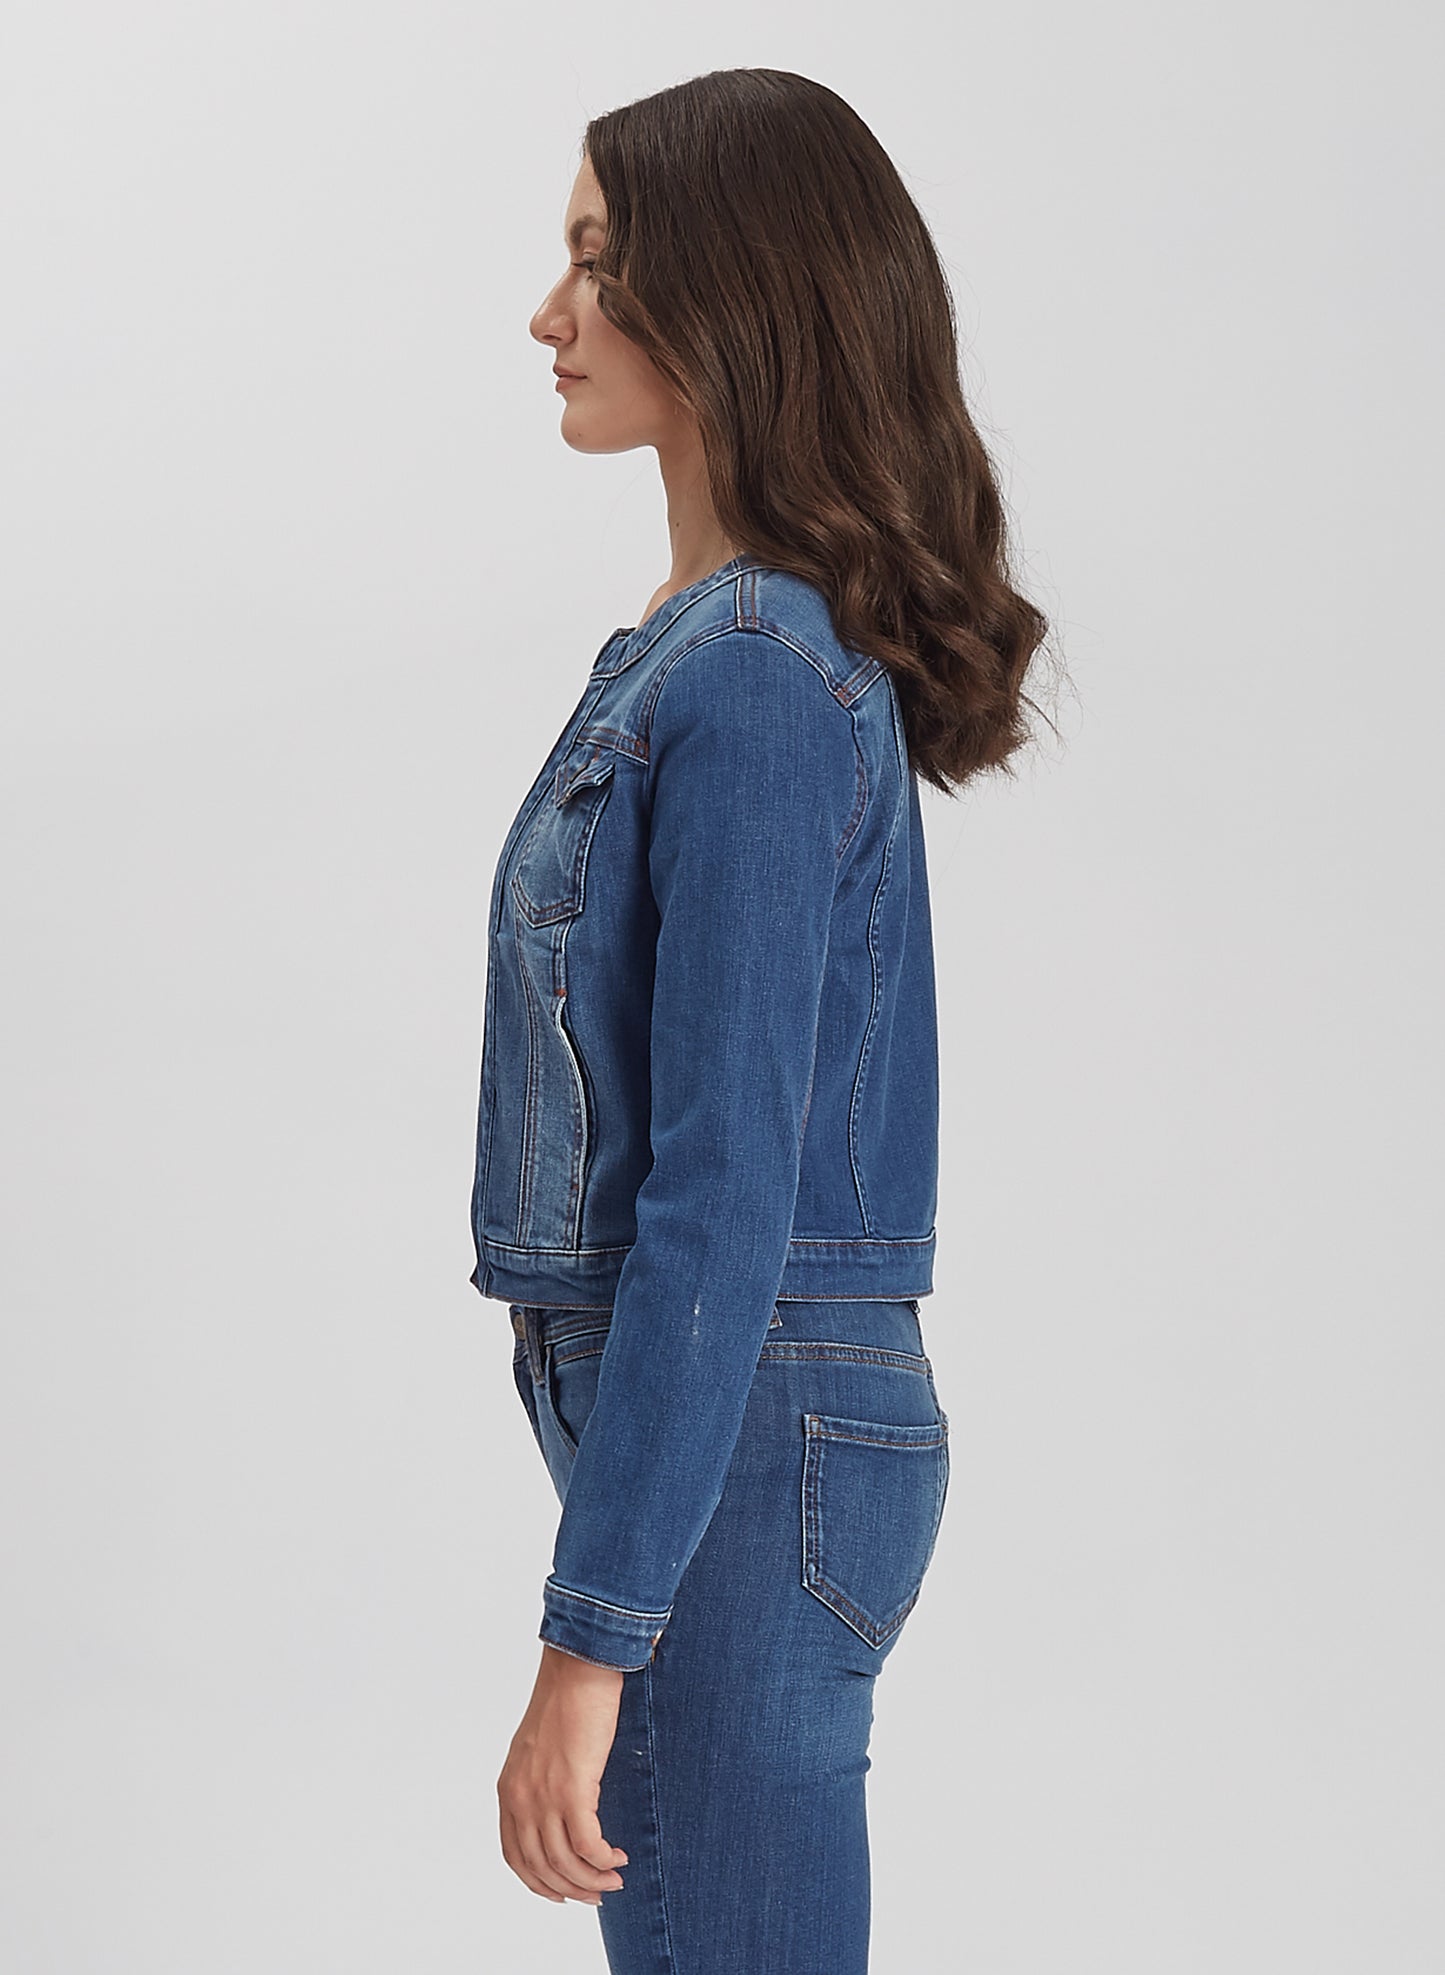 EVA - Bolero Denim Jeans Jacket - Mid Blue